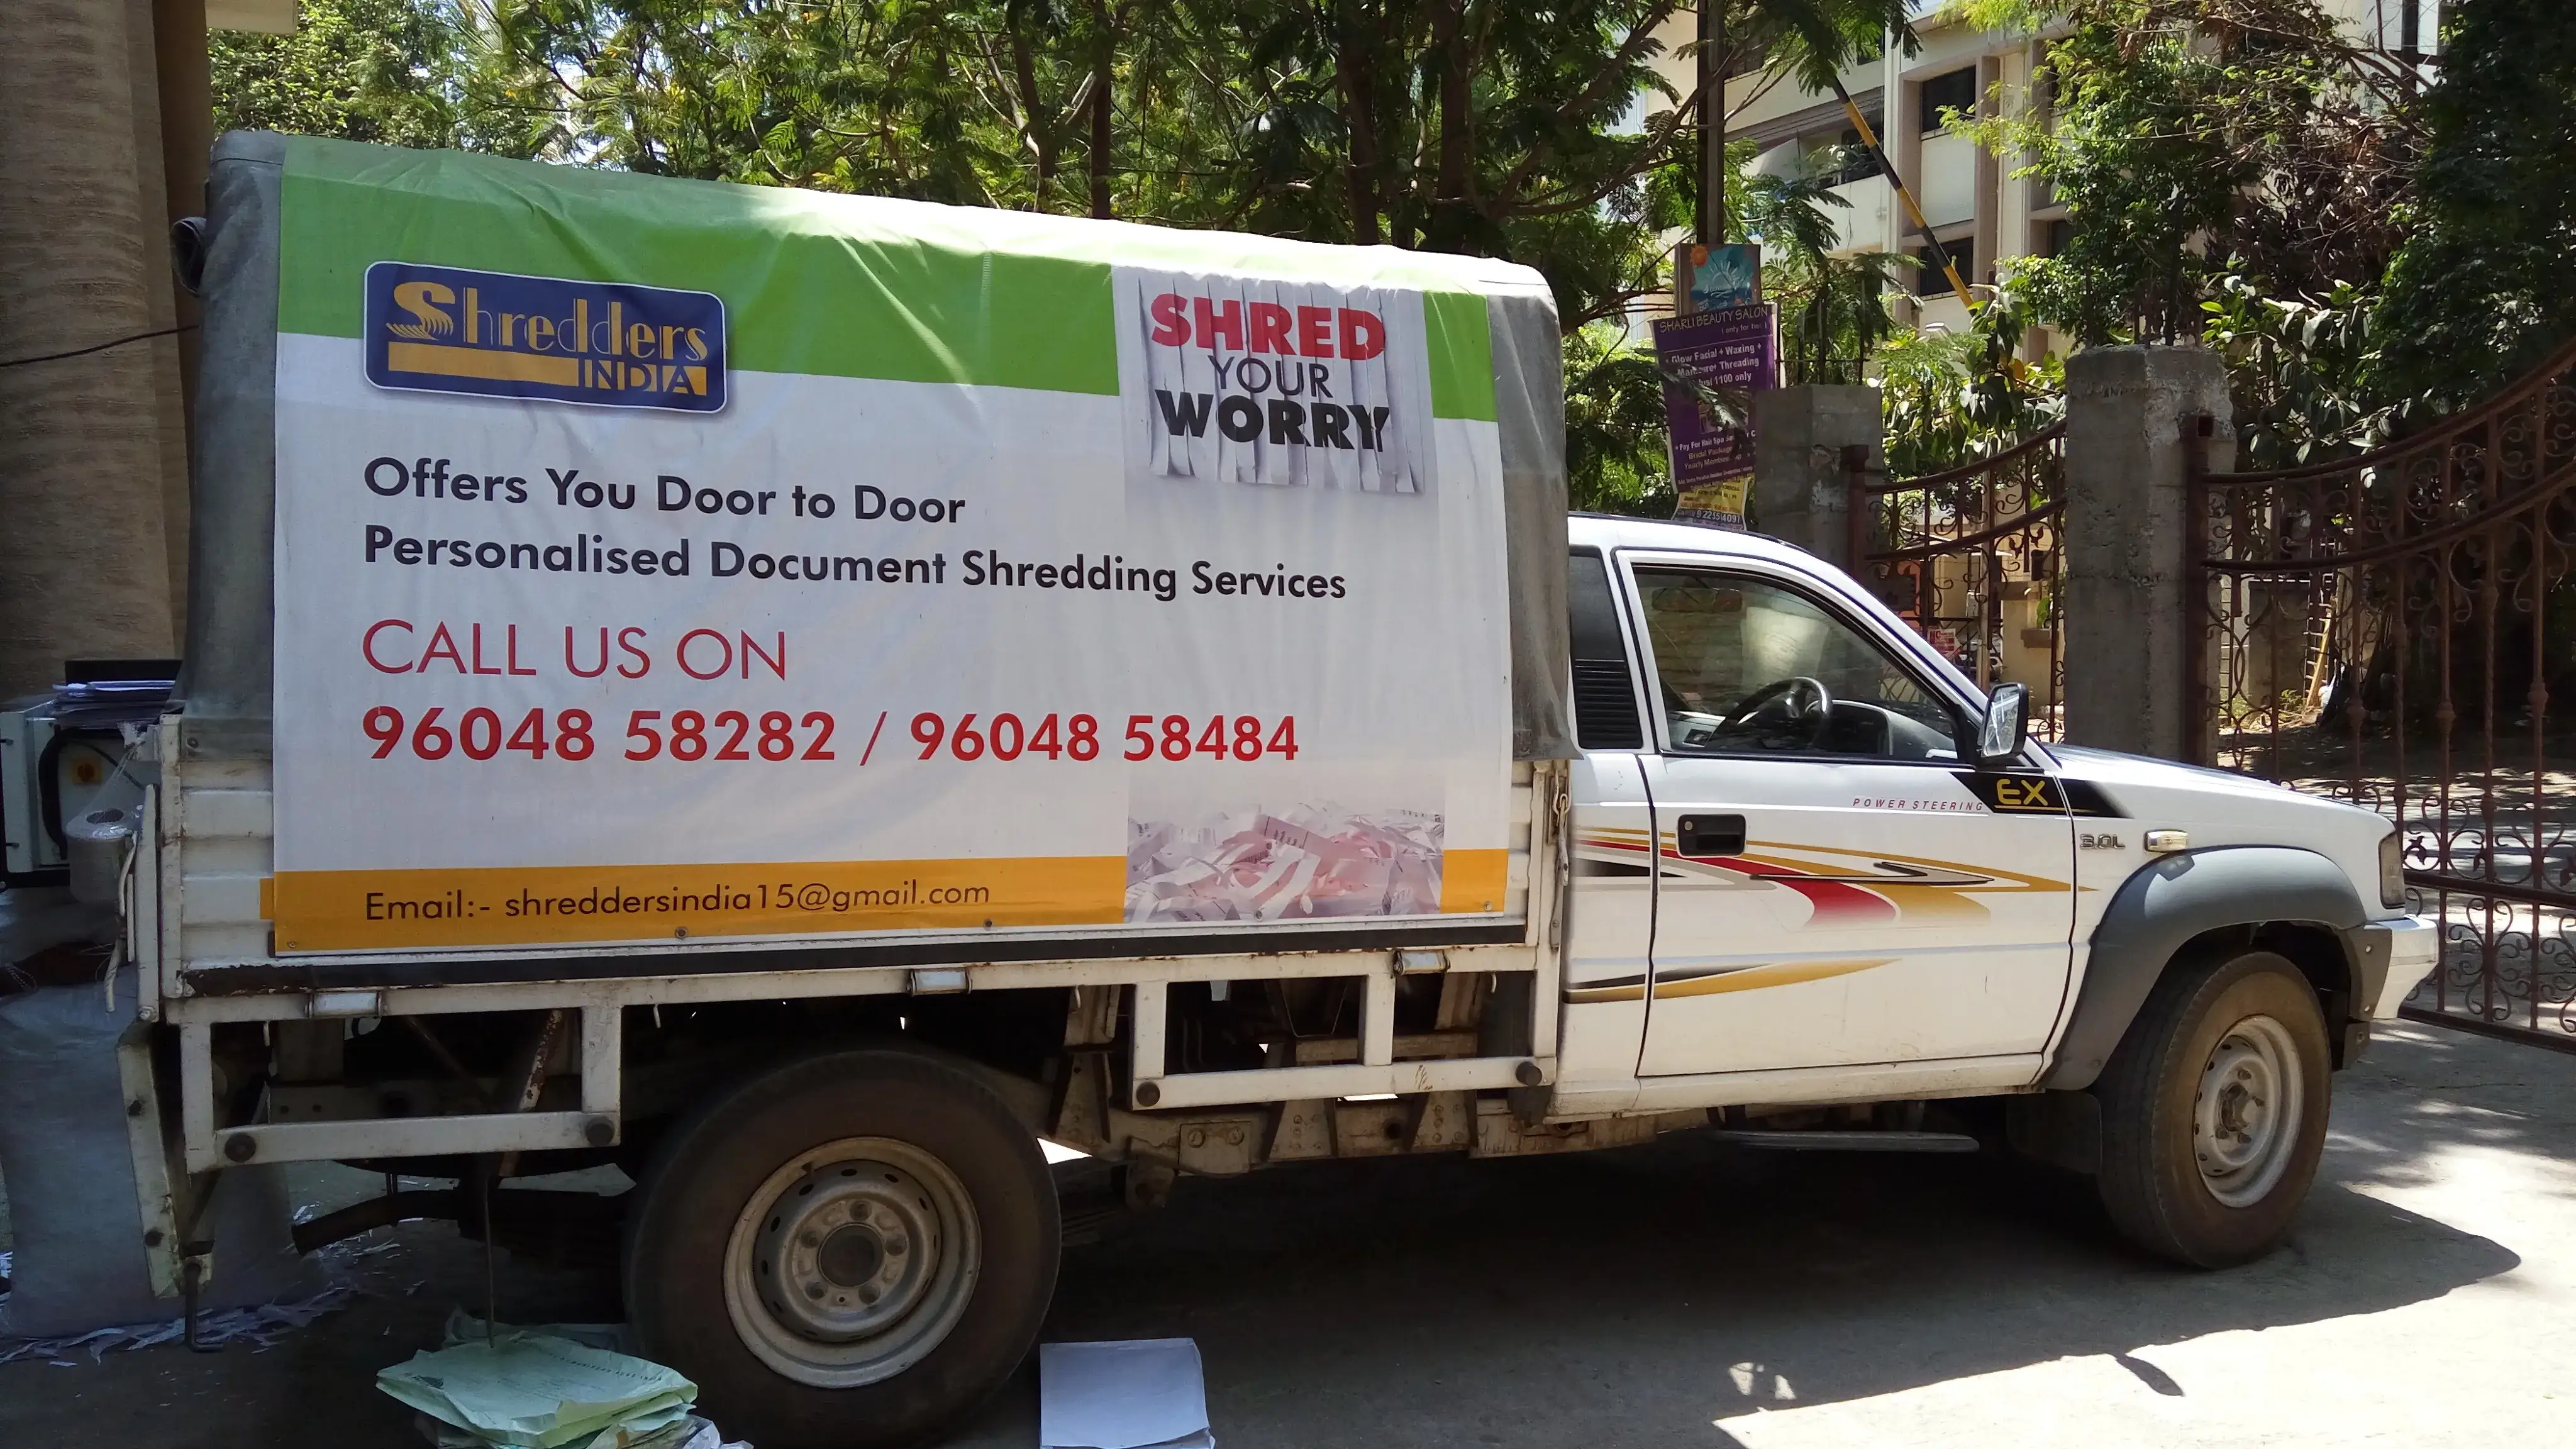 On-site-Shredding-Vehicle - Shredders India